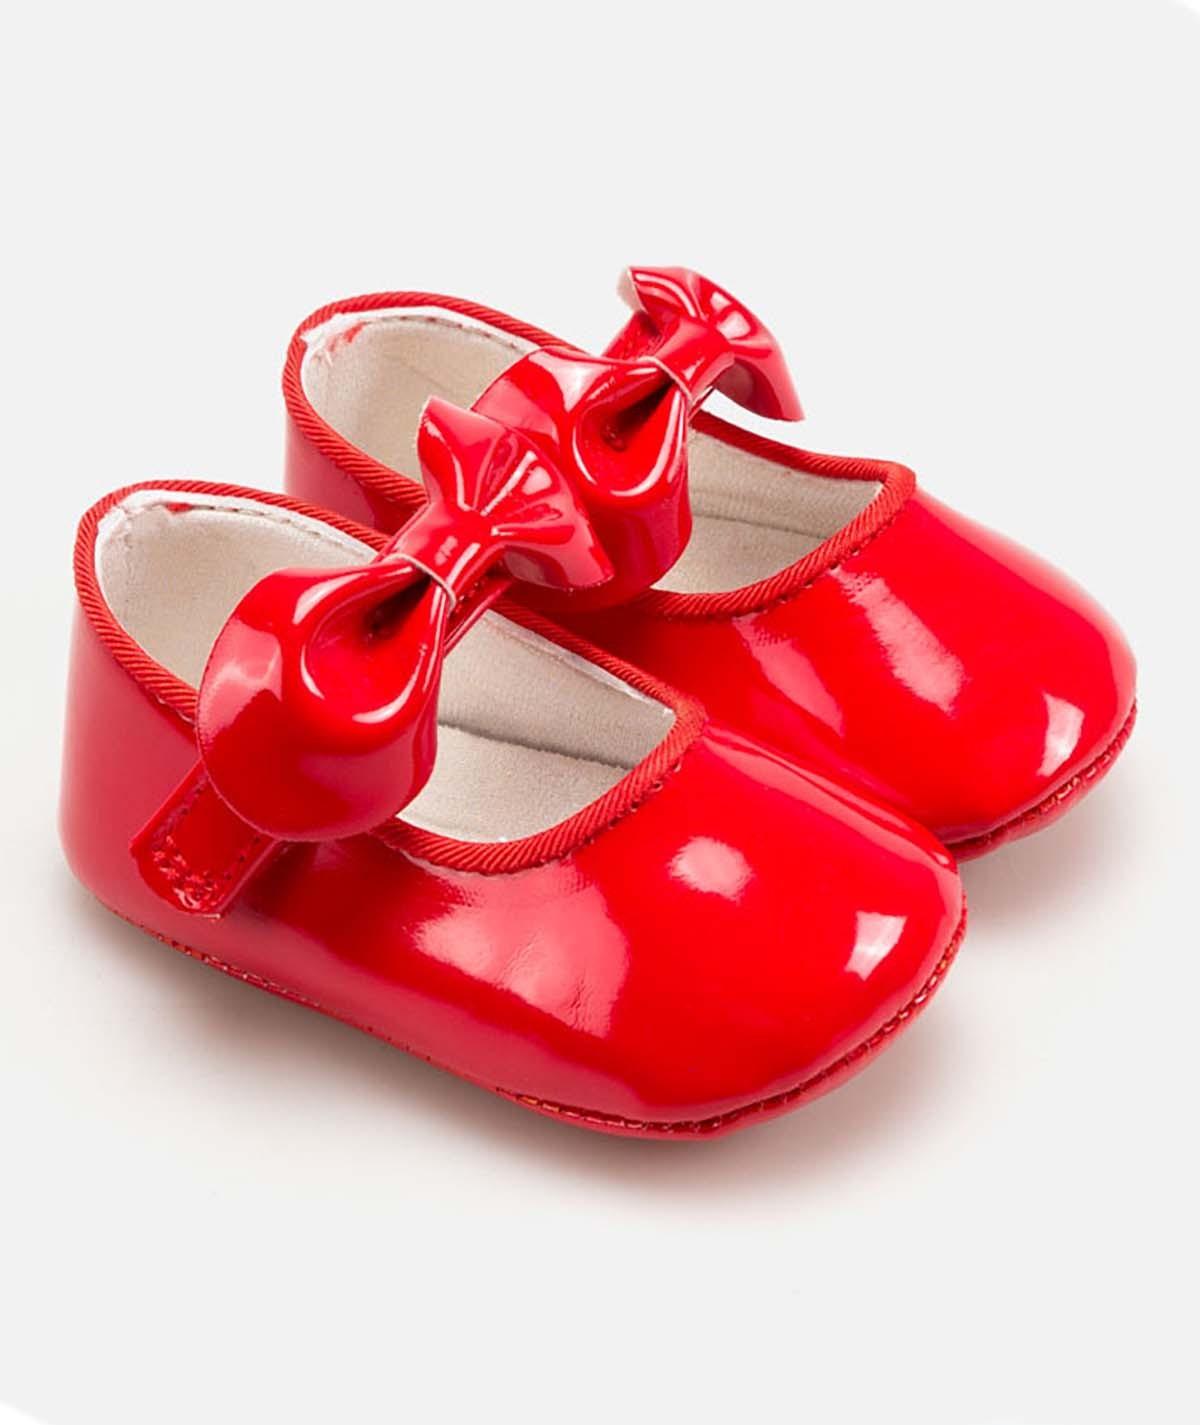 Zapatos Bebé Recien Nacida Mayoral Merceditas Lazo Rojo - Nanetes #